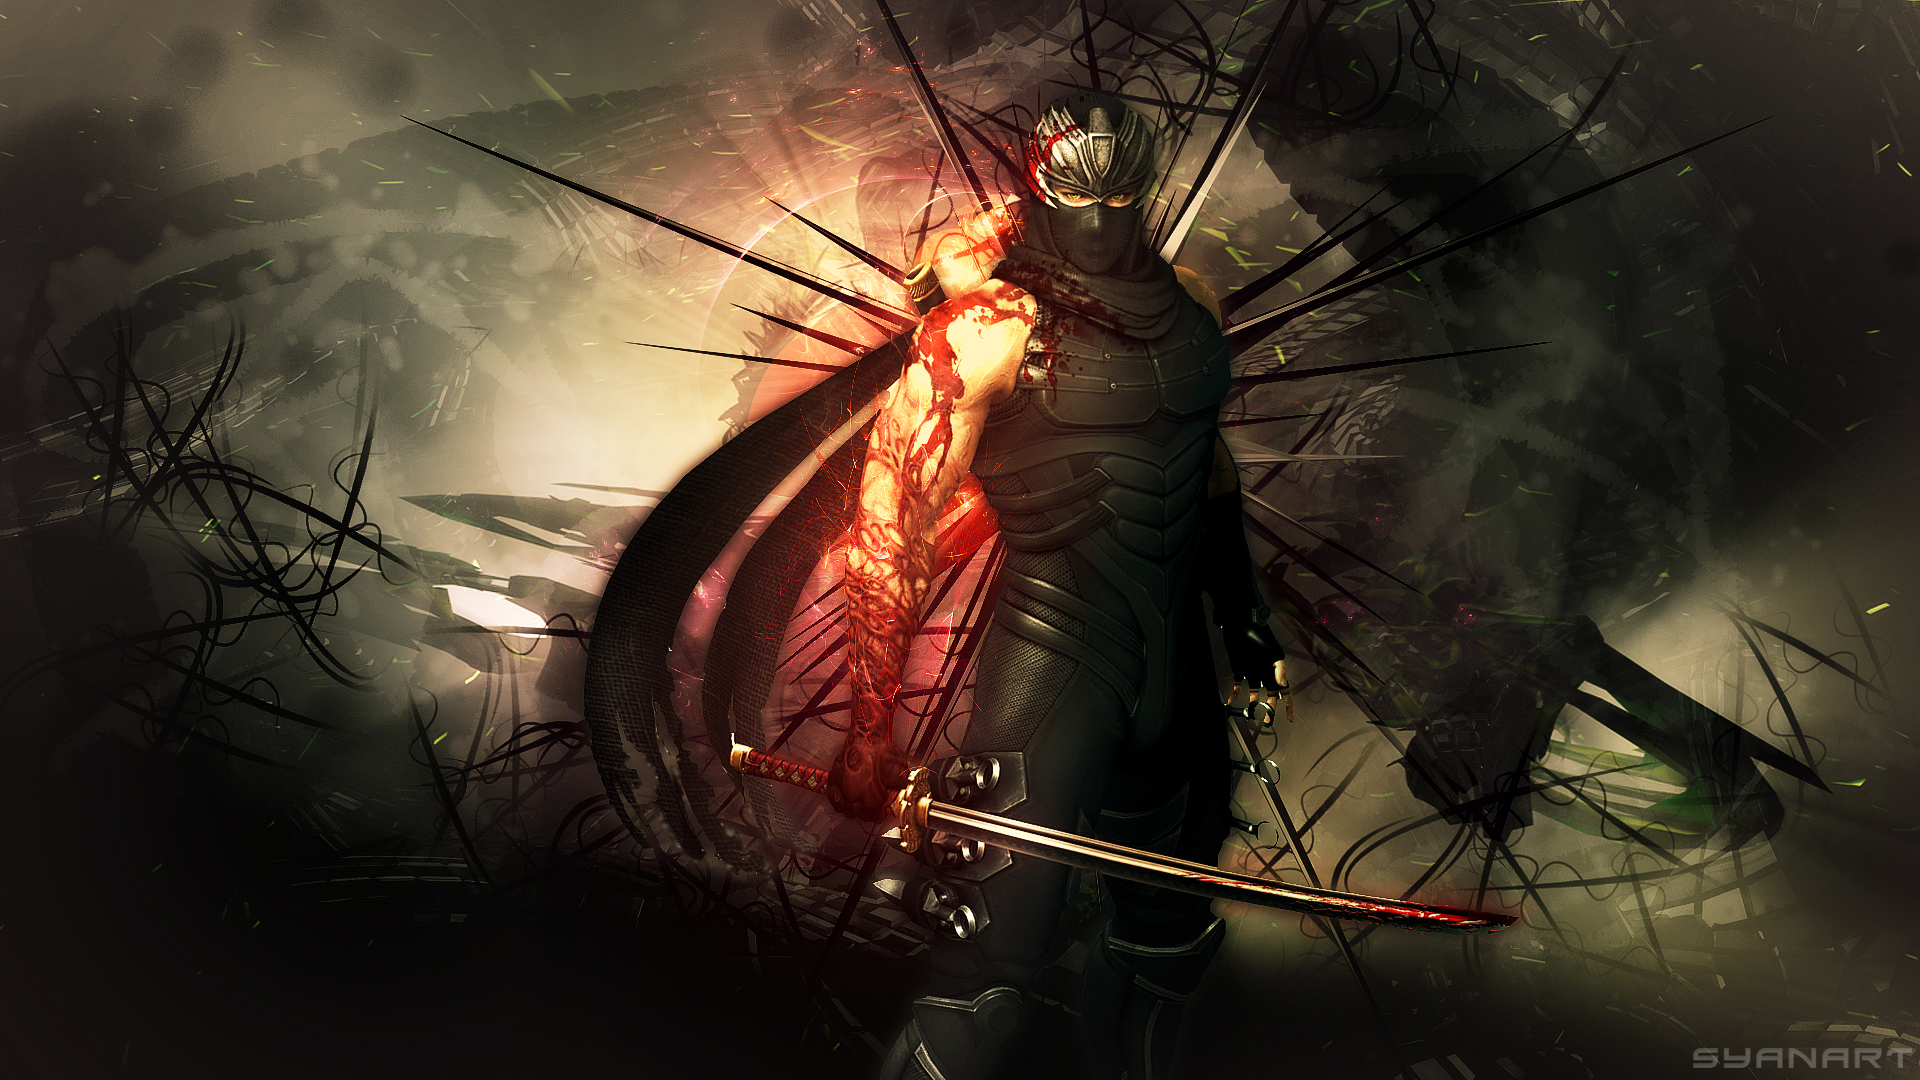 Ninja Gaiden 3 4K Wallpaper by DanteArtWallpapers on DeviantArt